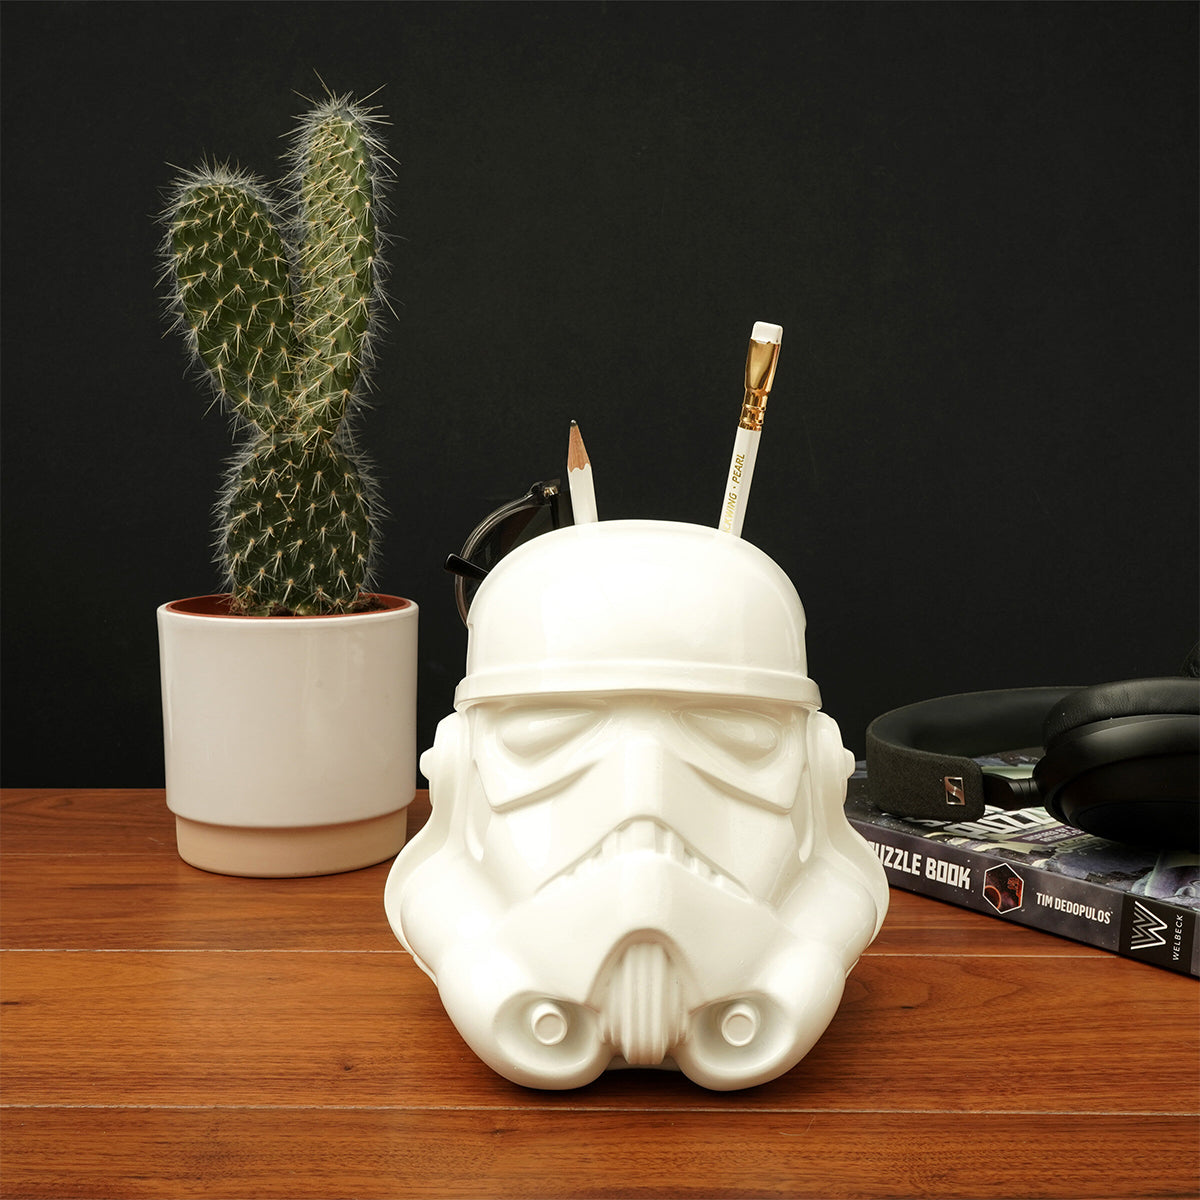 Storm Trooper Desk Tidy